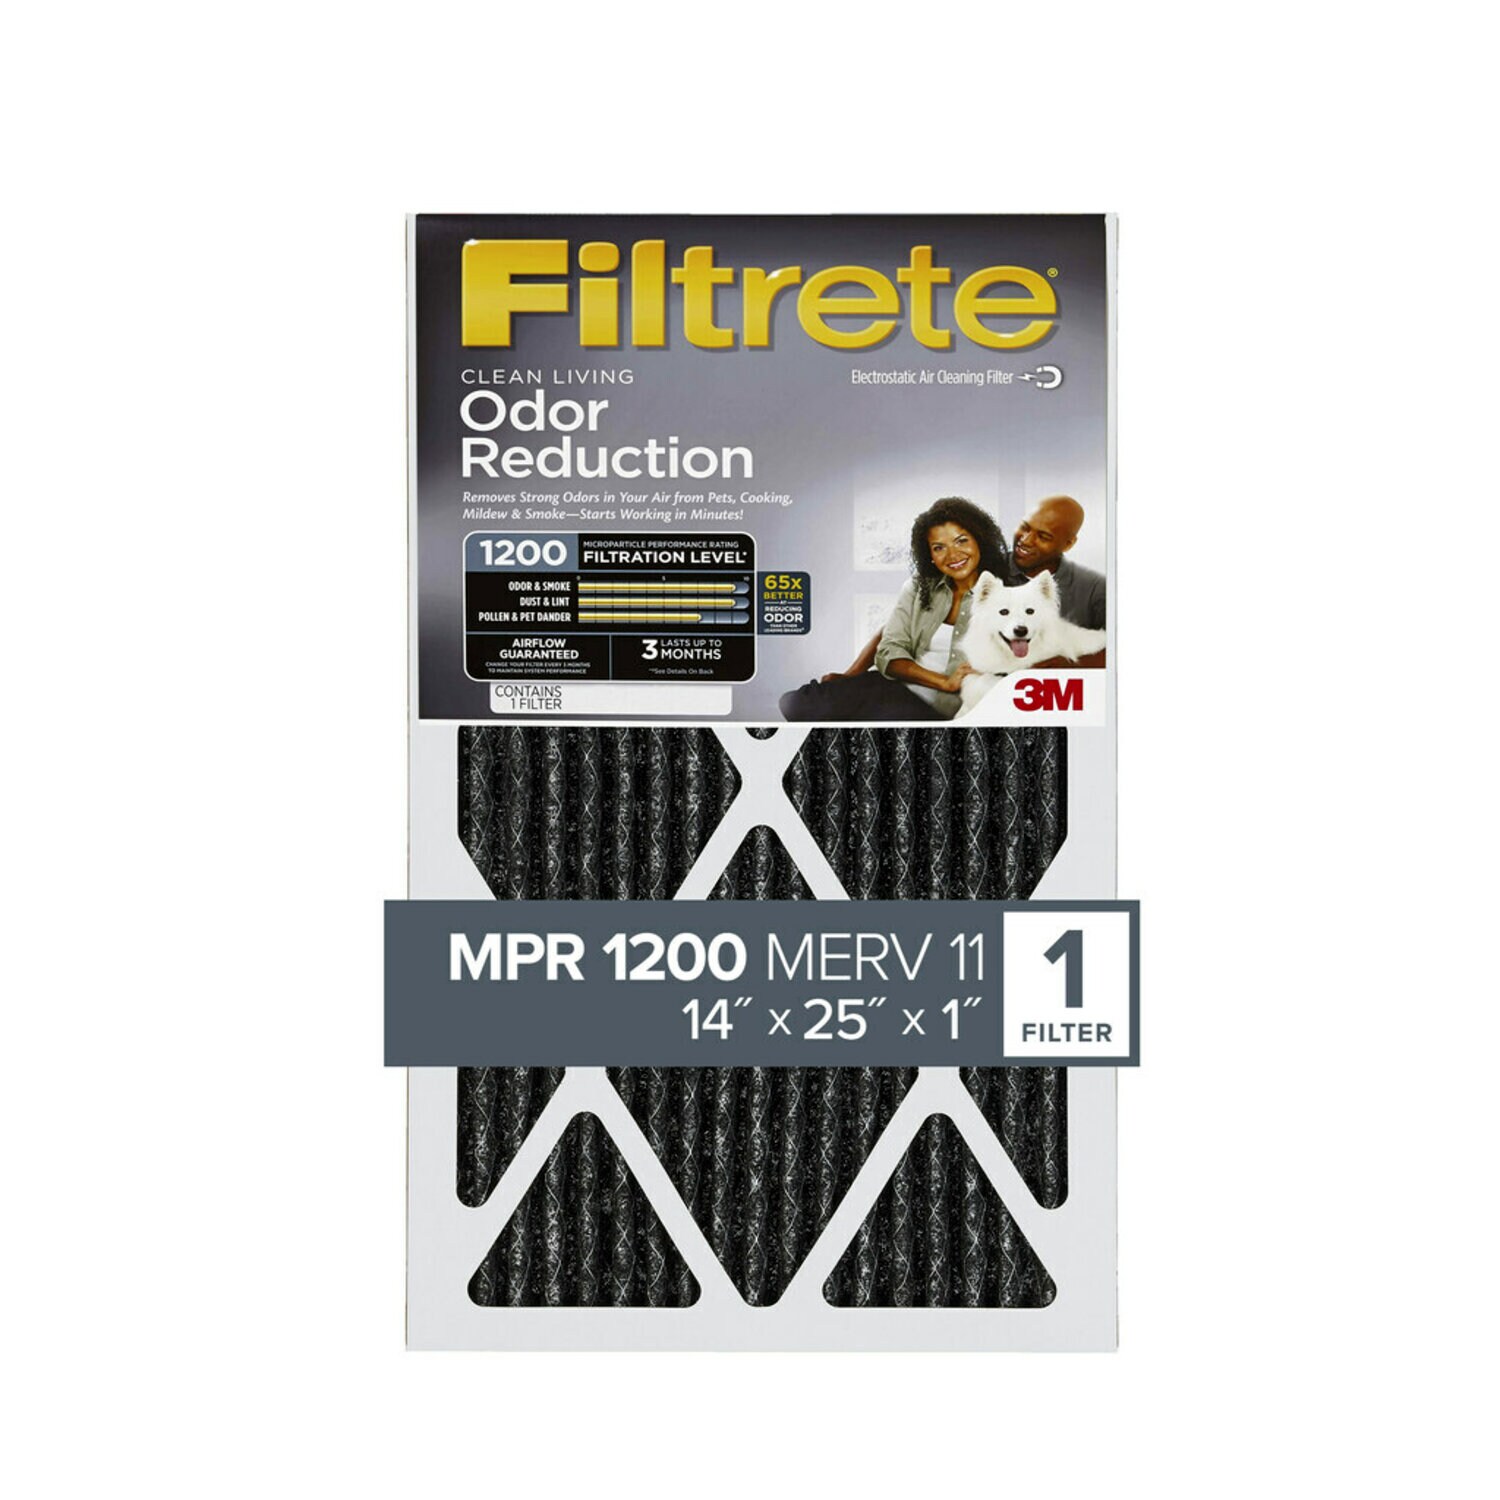 7010311294 - Filtrete Home Odor Reduction Filter HOME04-4, 14 in x 25 in x 1 in
(35,5 cm x 63,5 cm x 2,5 cm)